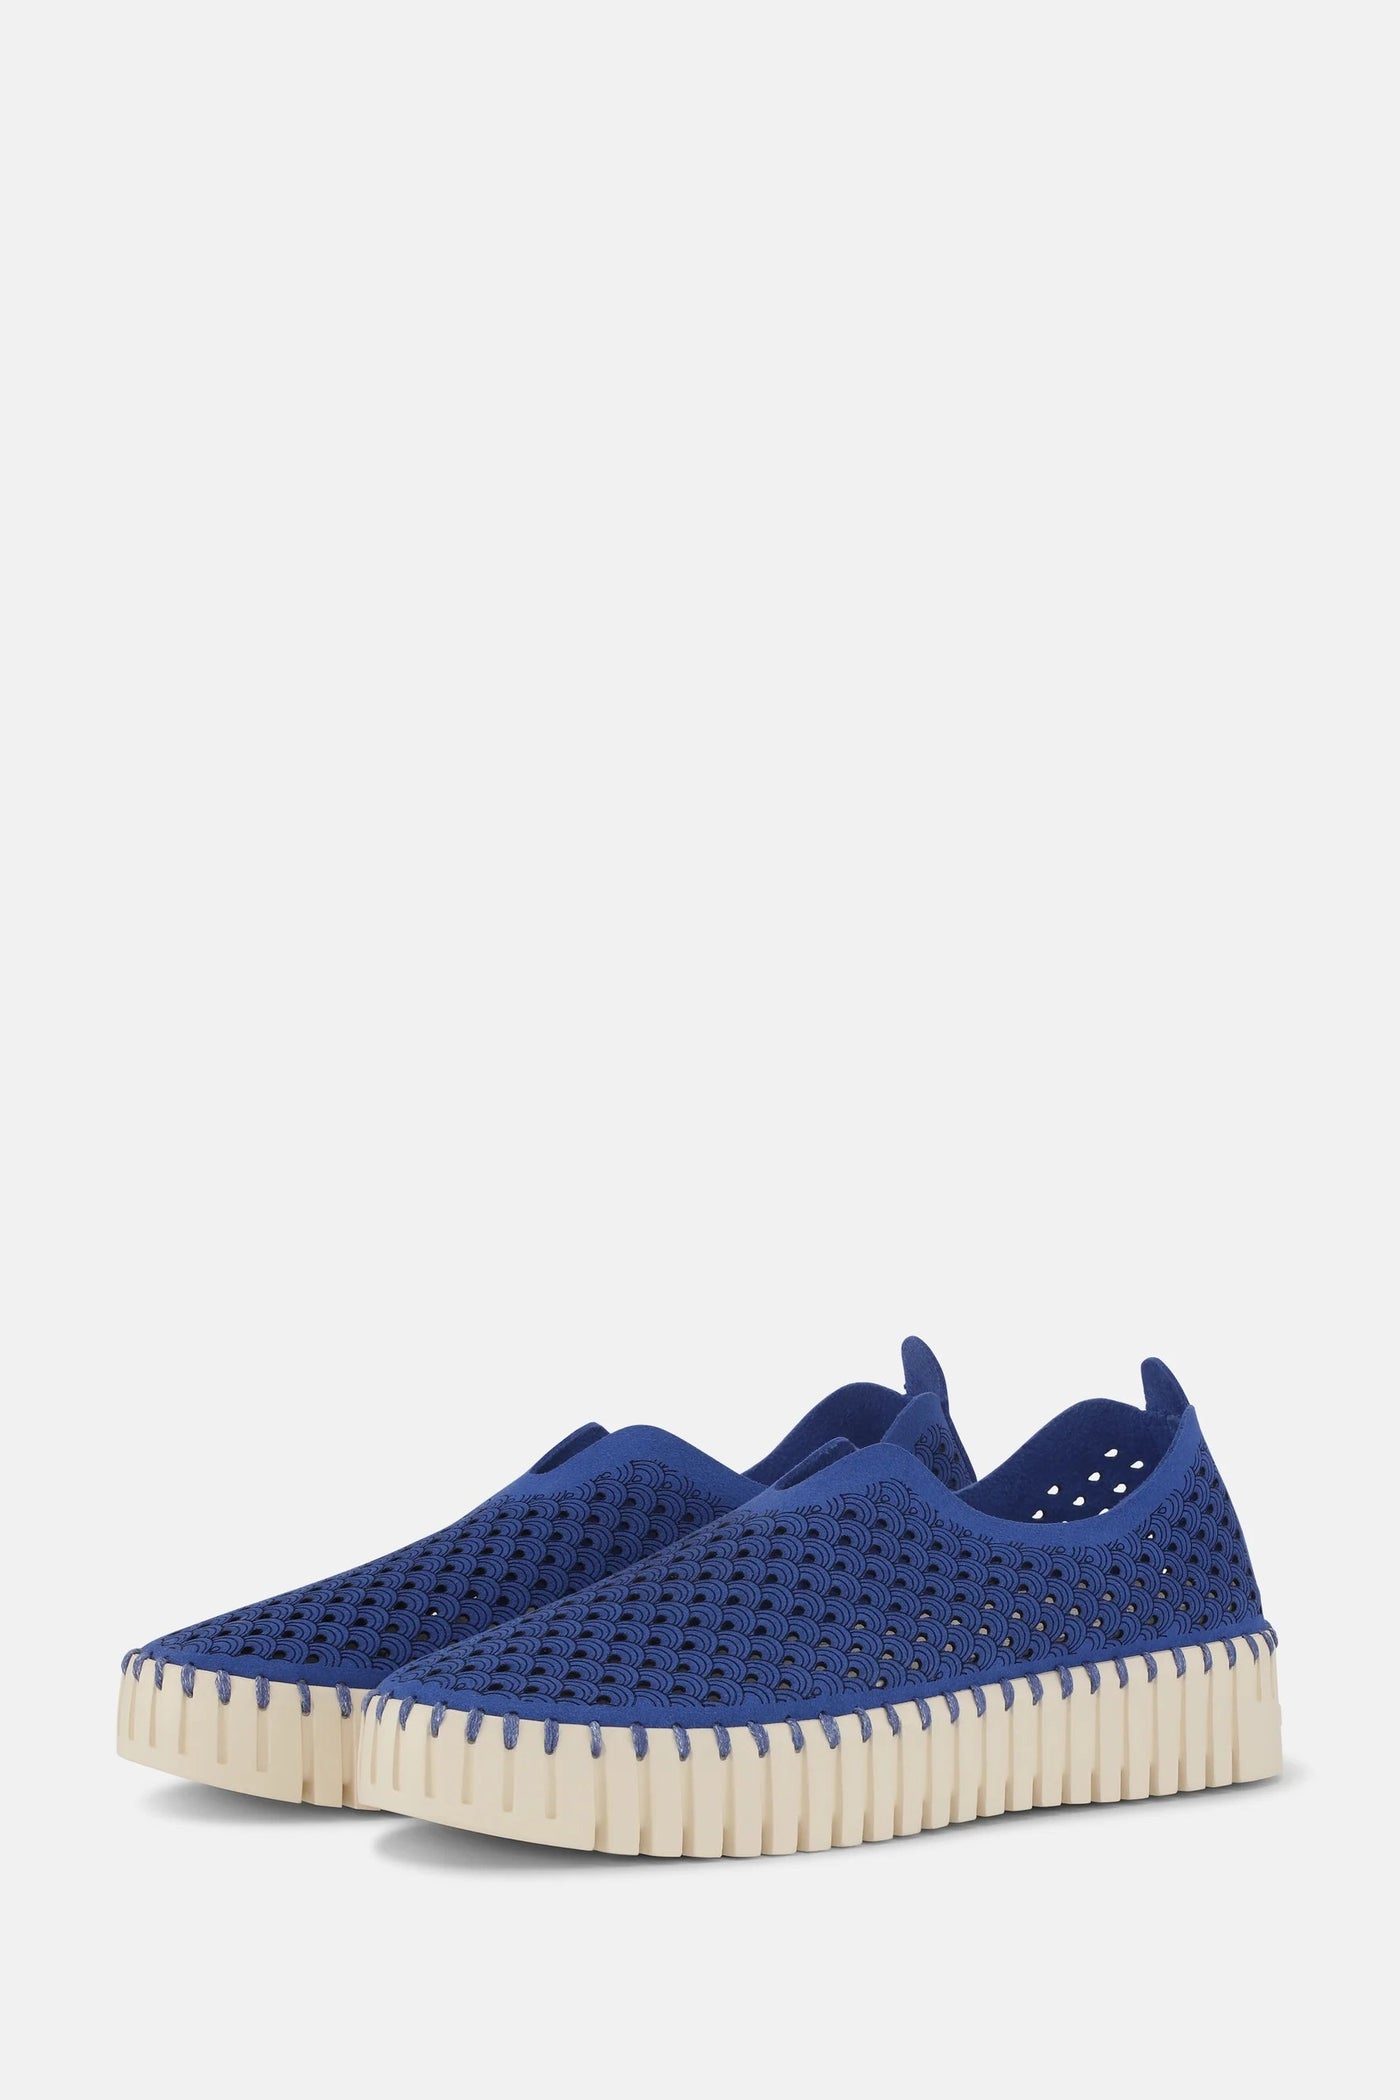 Ilse Jacobsen Platform Tulip Shoes in Blue Web-Womens-Ohh! By Gum - Shop Sustainable